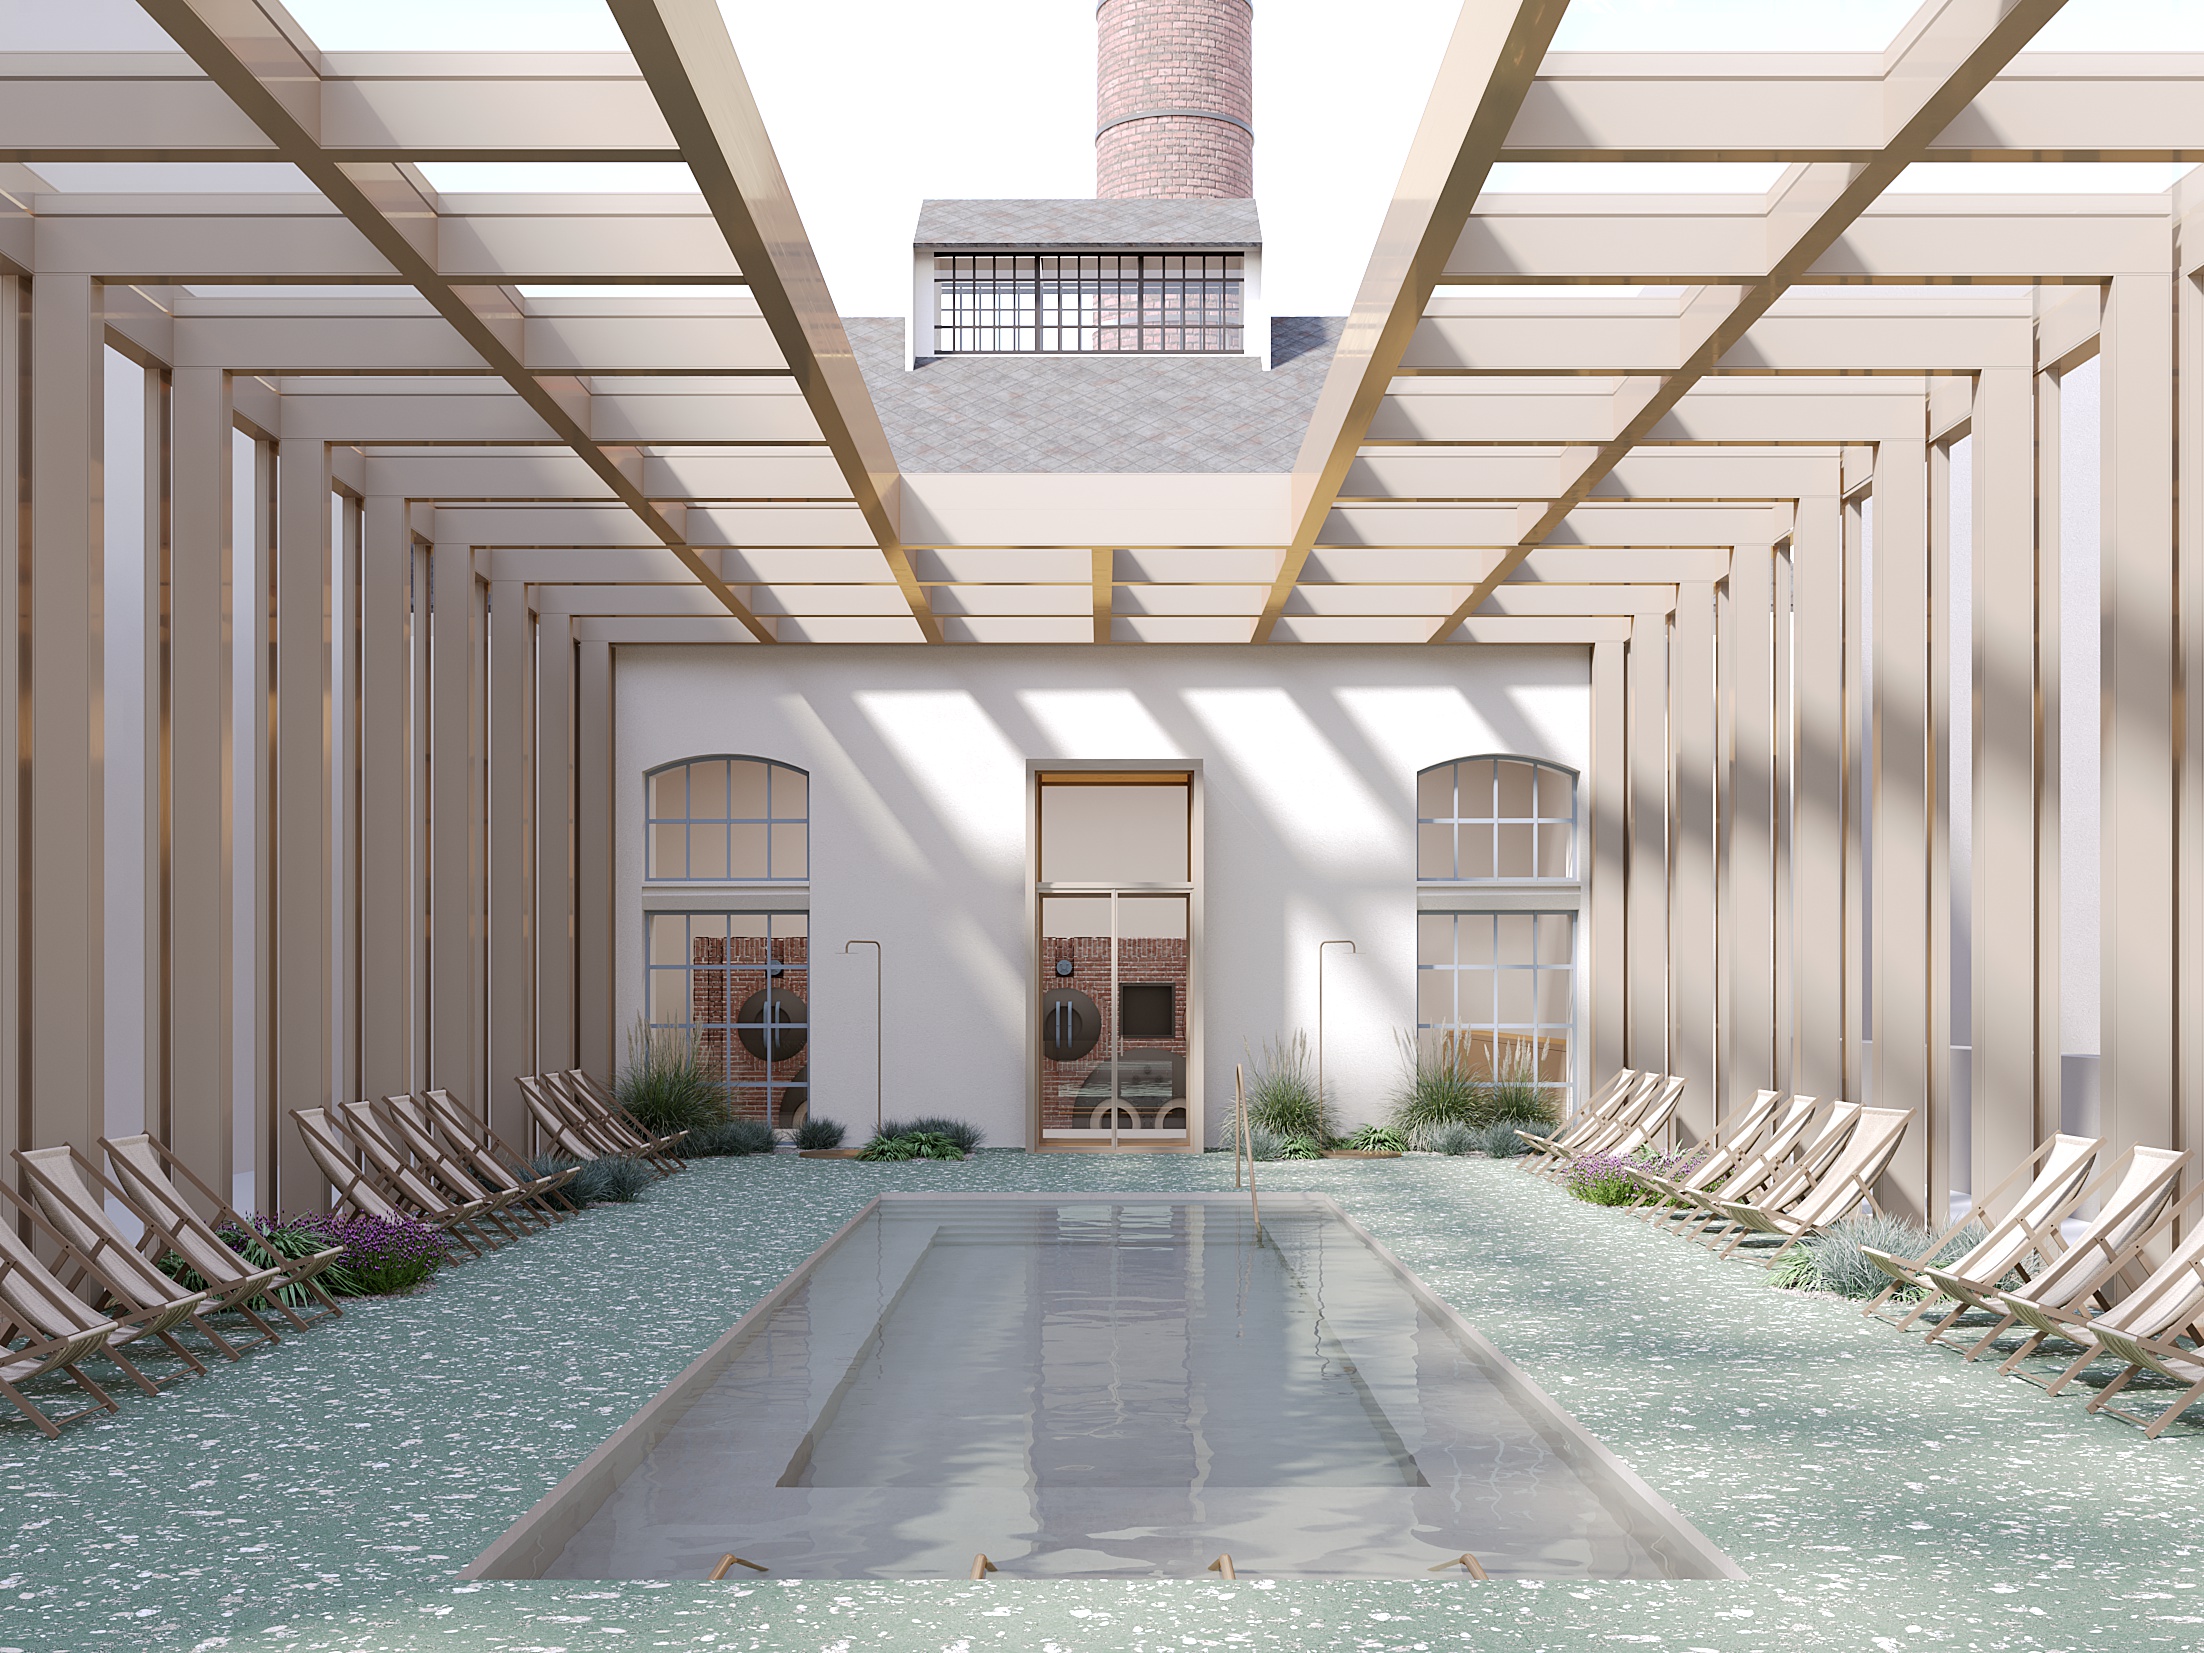 Návrh rekonštrukcie kúpeľov Grössling od talianského ateliéru - vonkajší bazén s otvorenou strechou